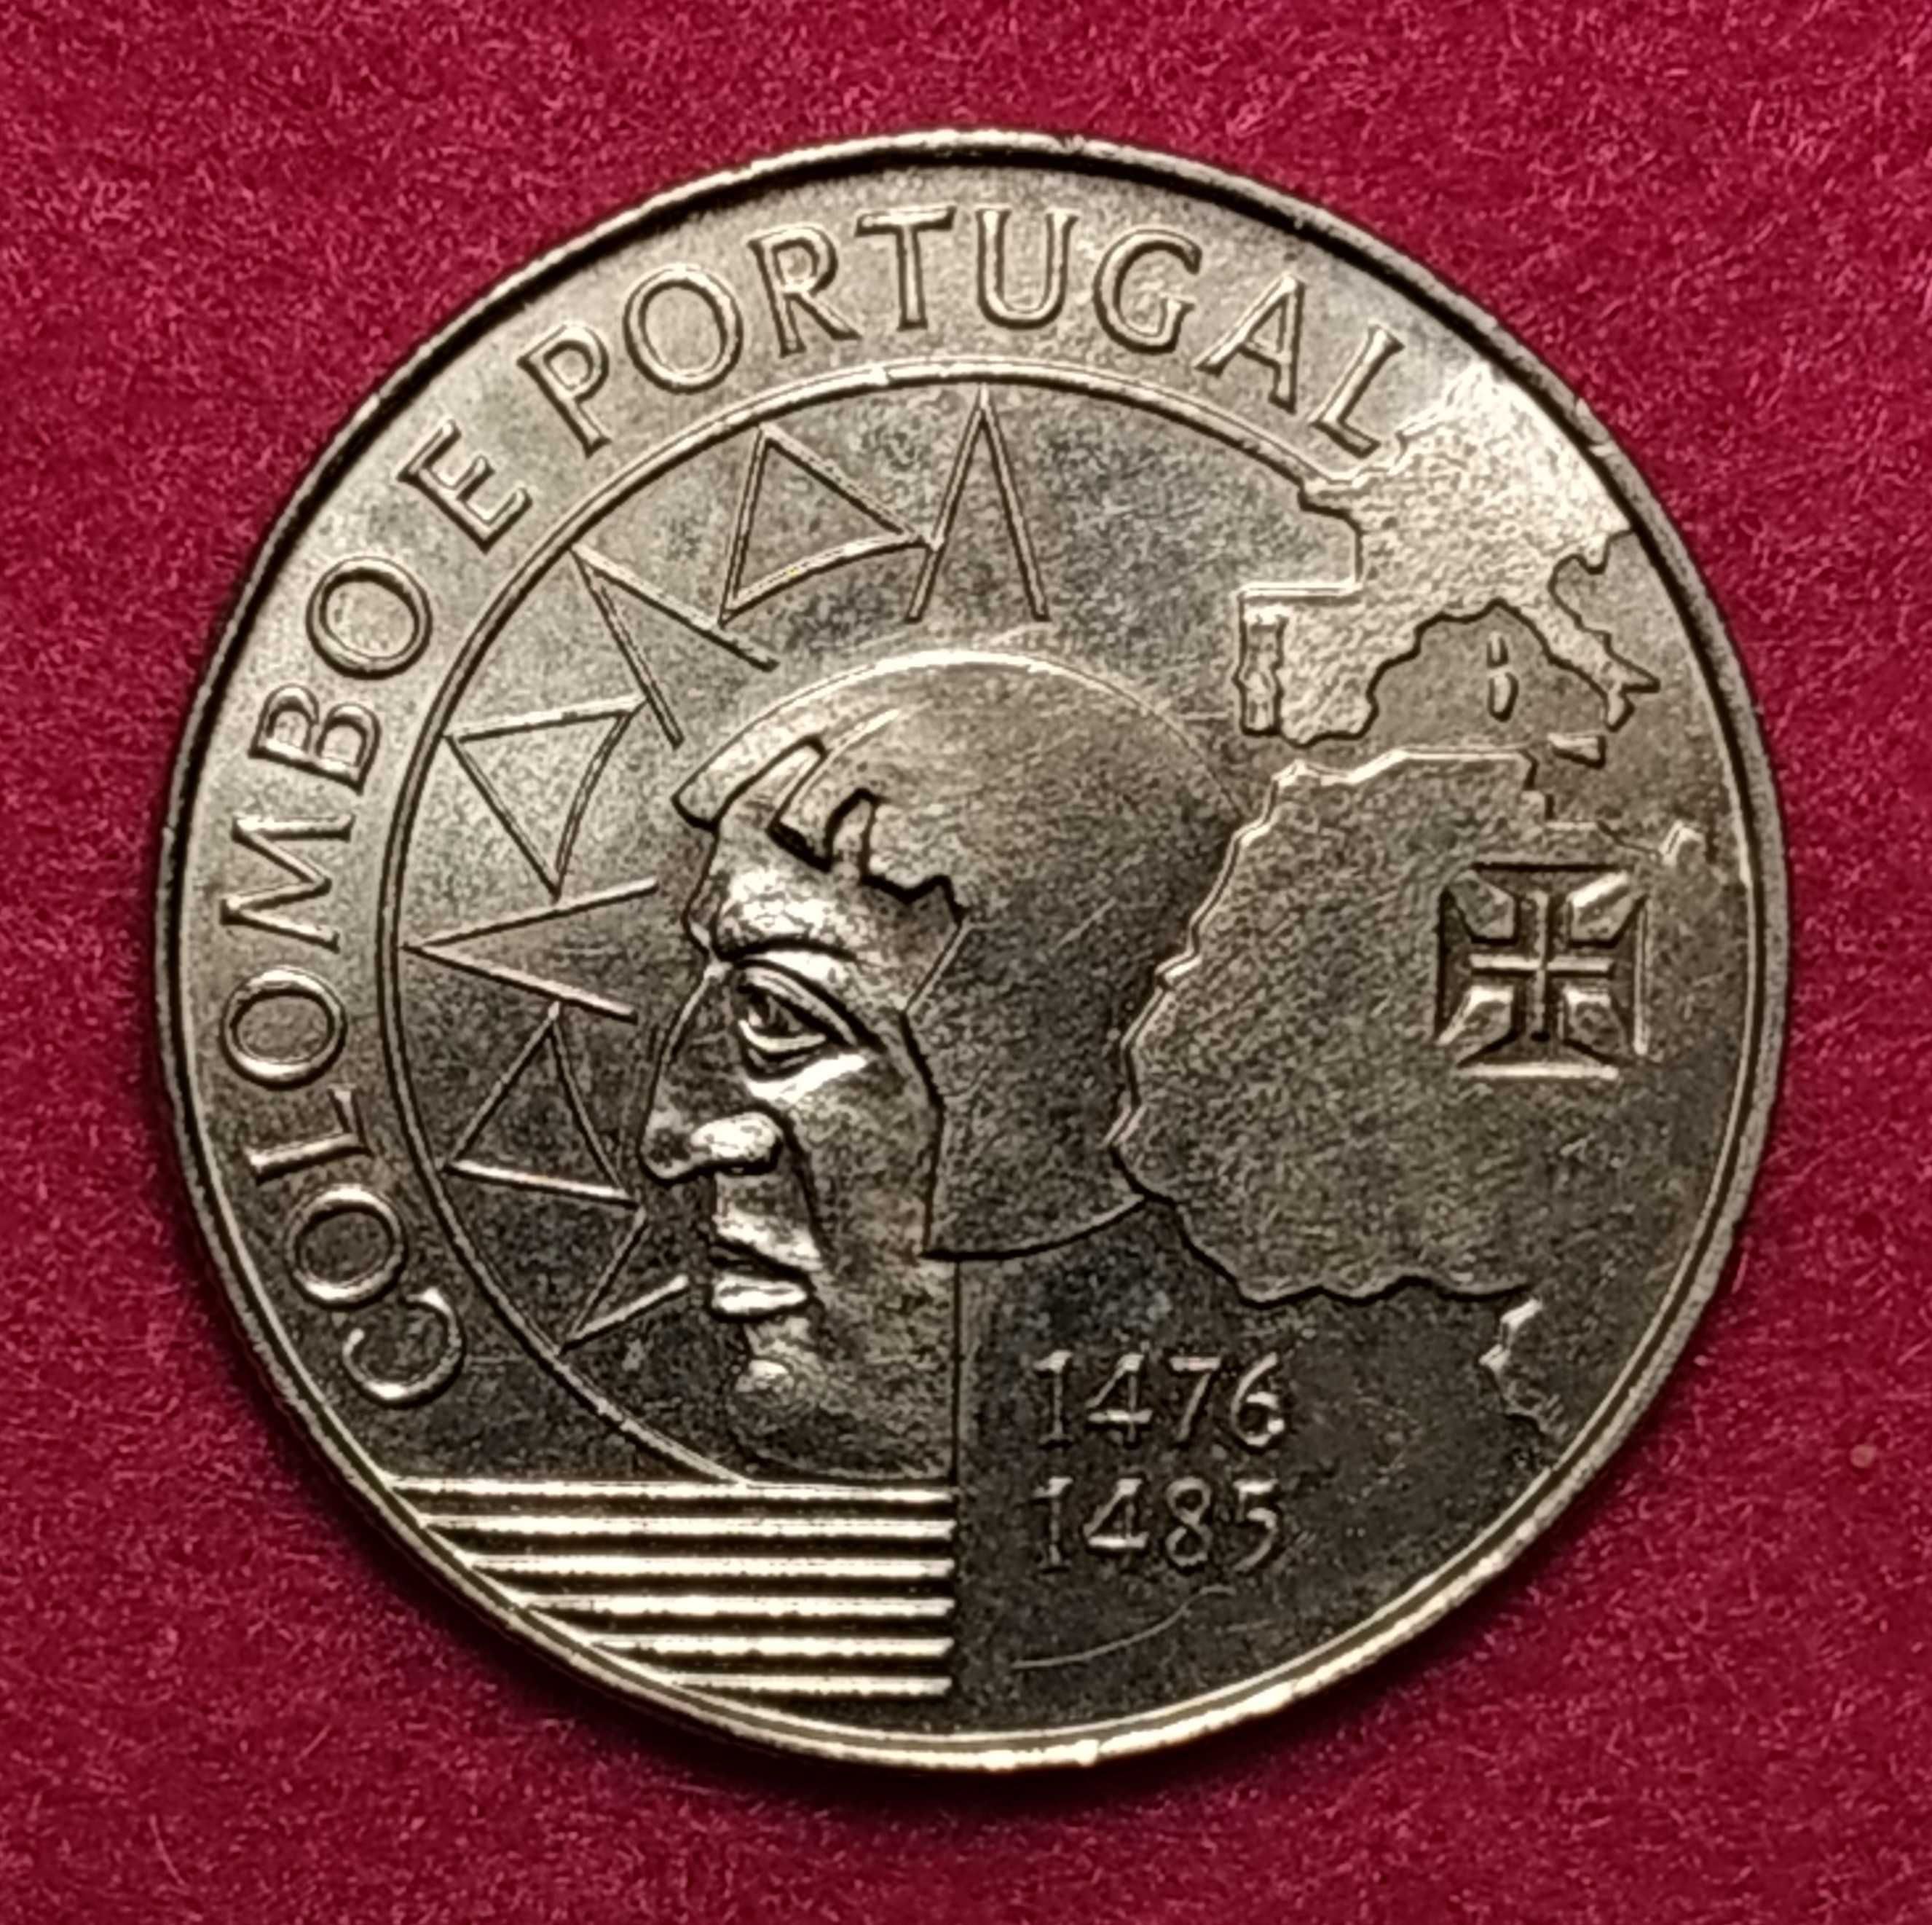 Portugal - moeda de 200 escudos de 1991 Colombo